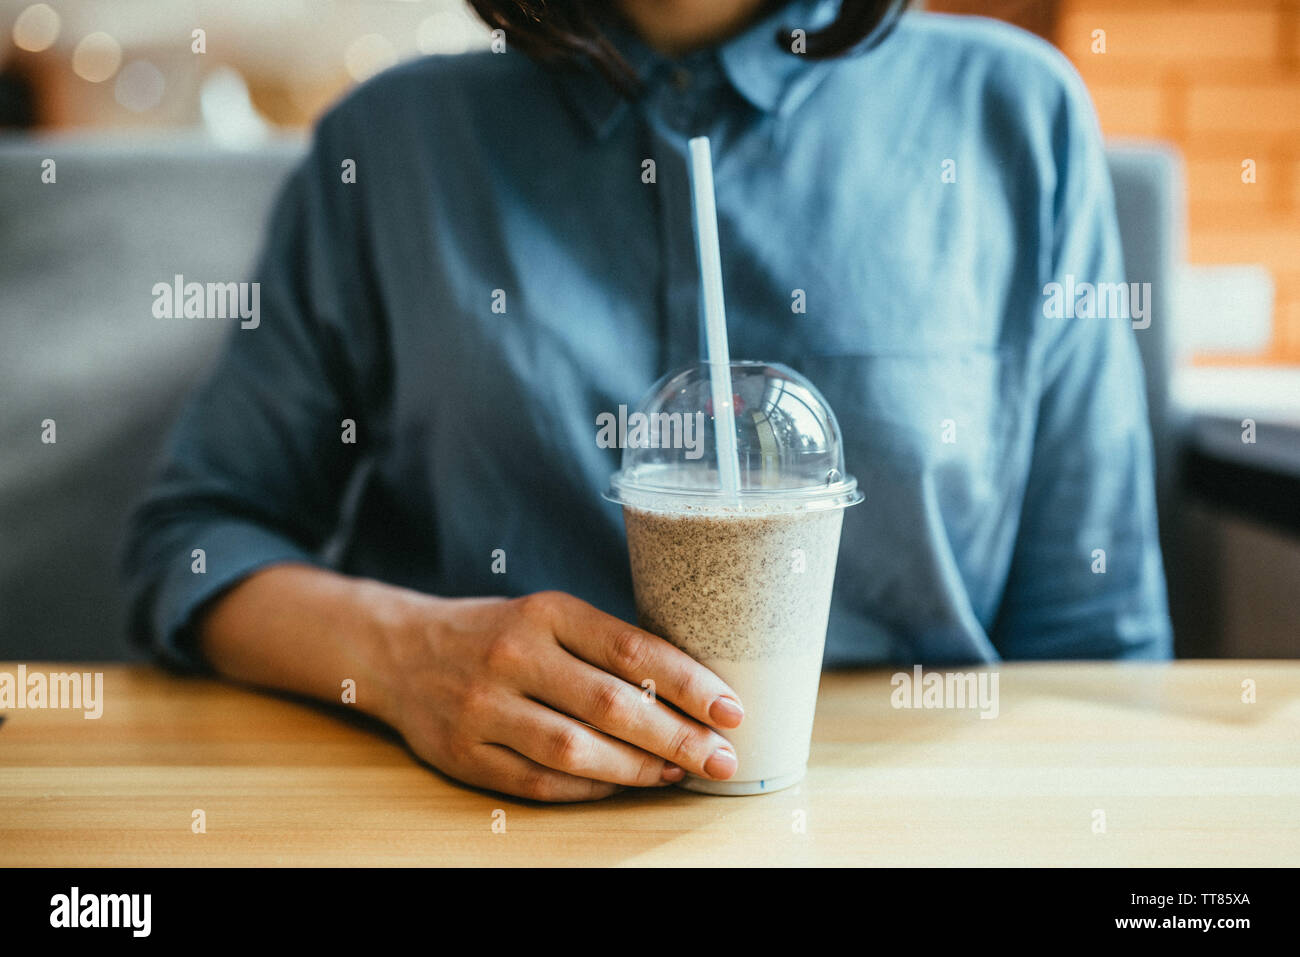 Milkshake in plastic cup Stock Photo by ©belchonock 134303180